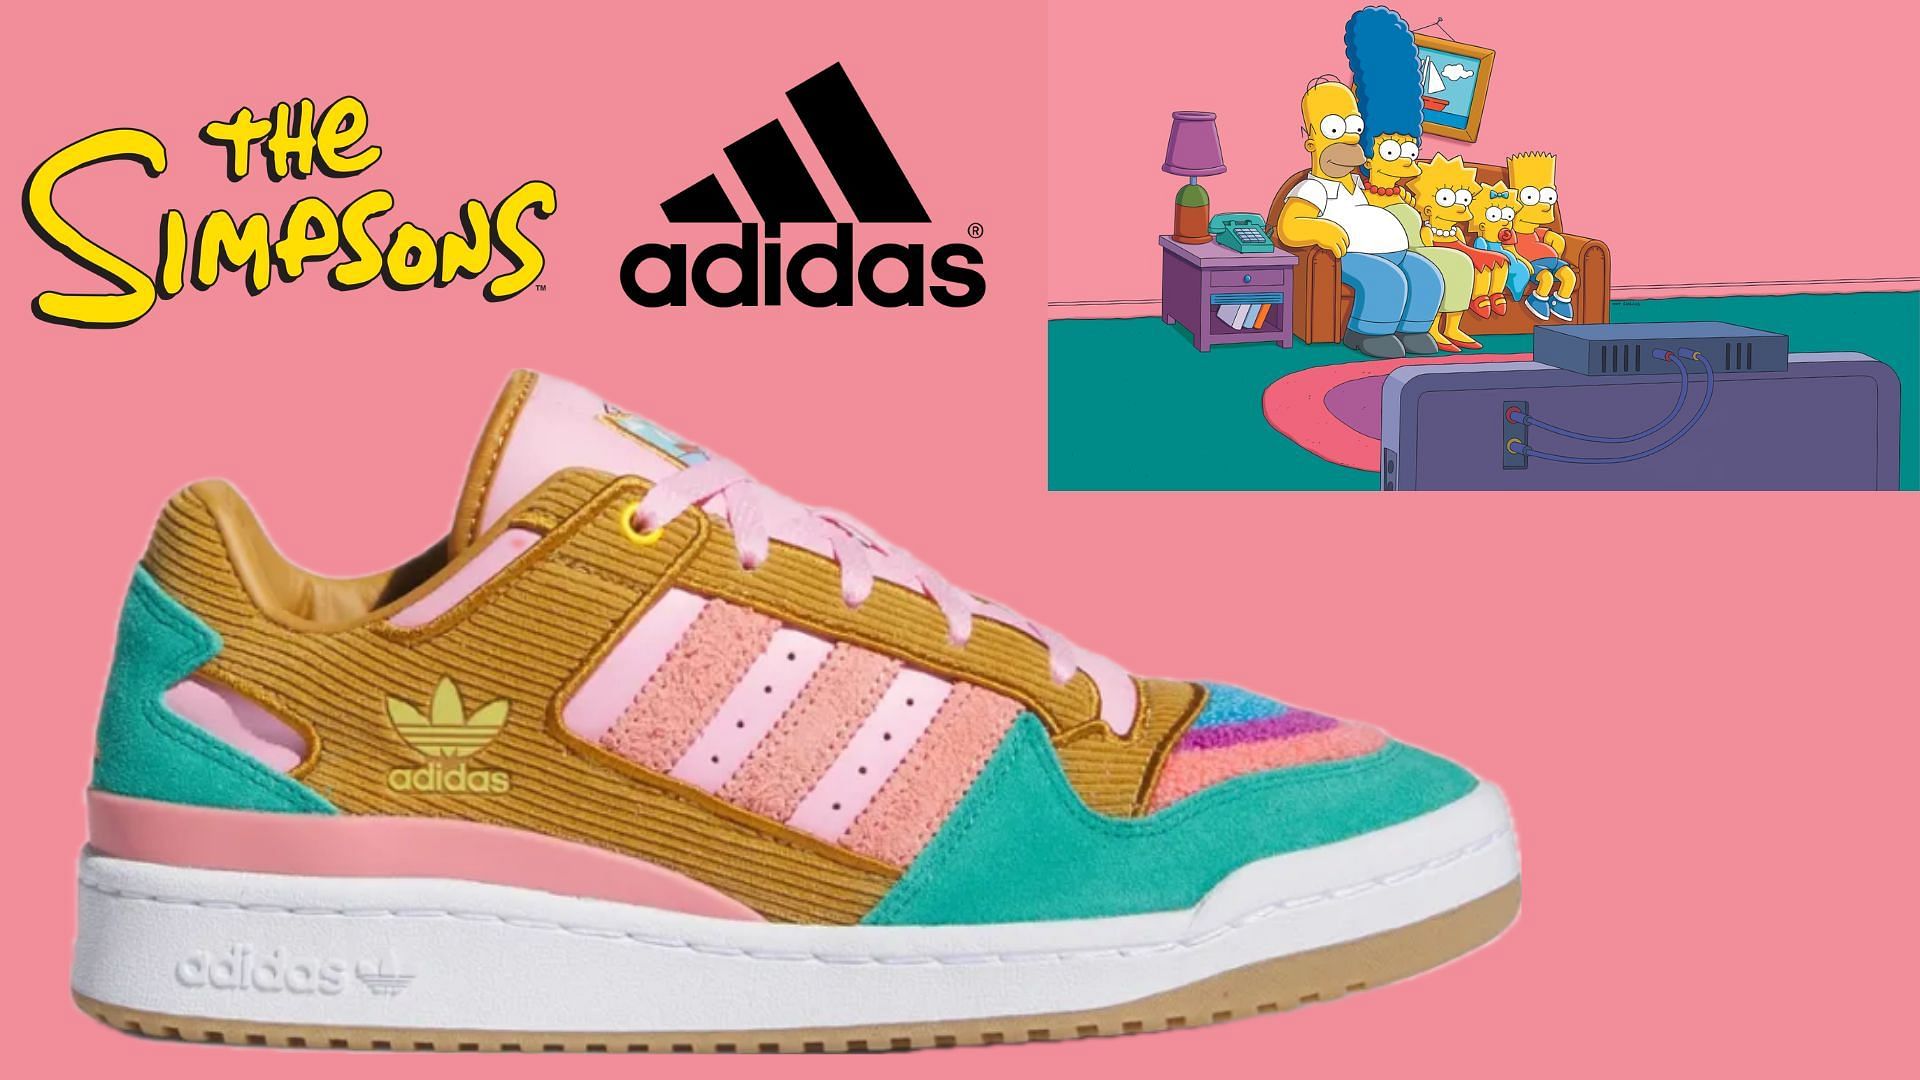 The Simpsons x Adidas Forum Low shoes (Image via Adidas)